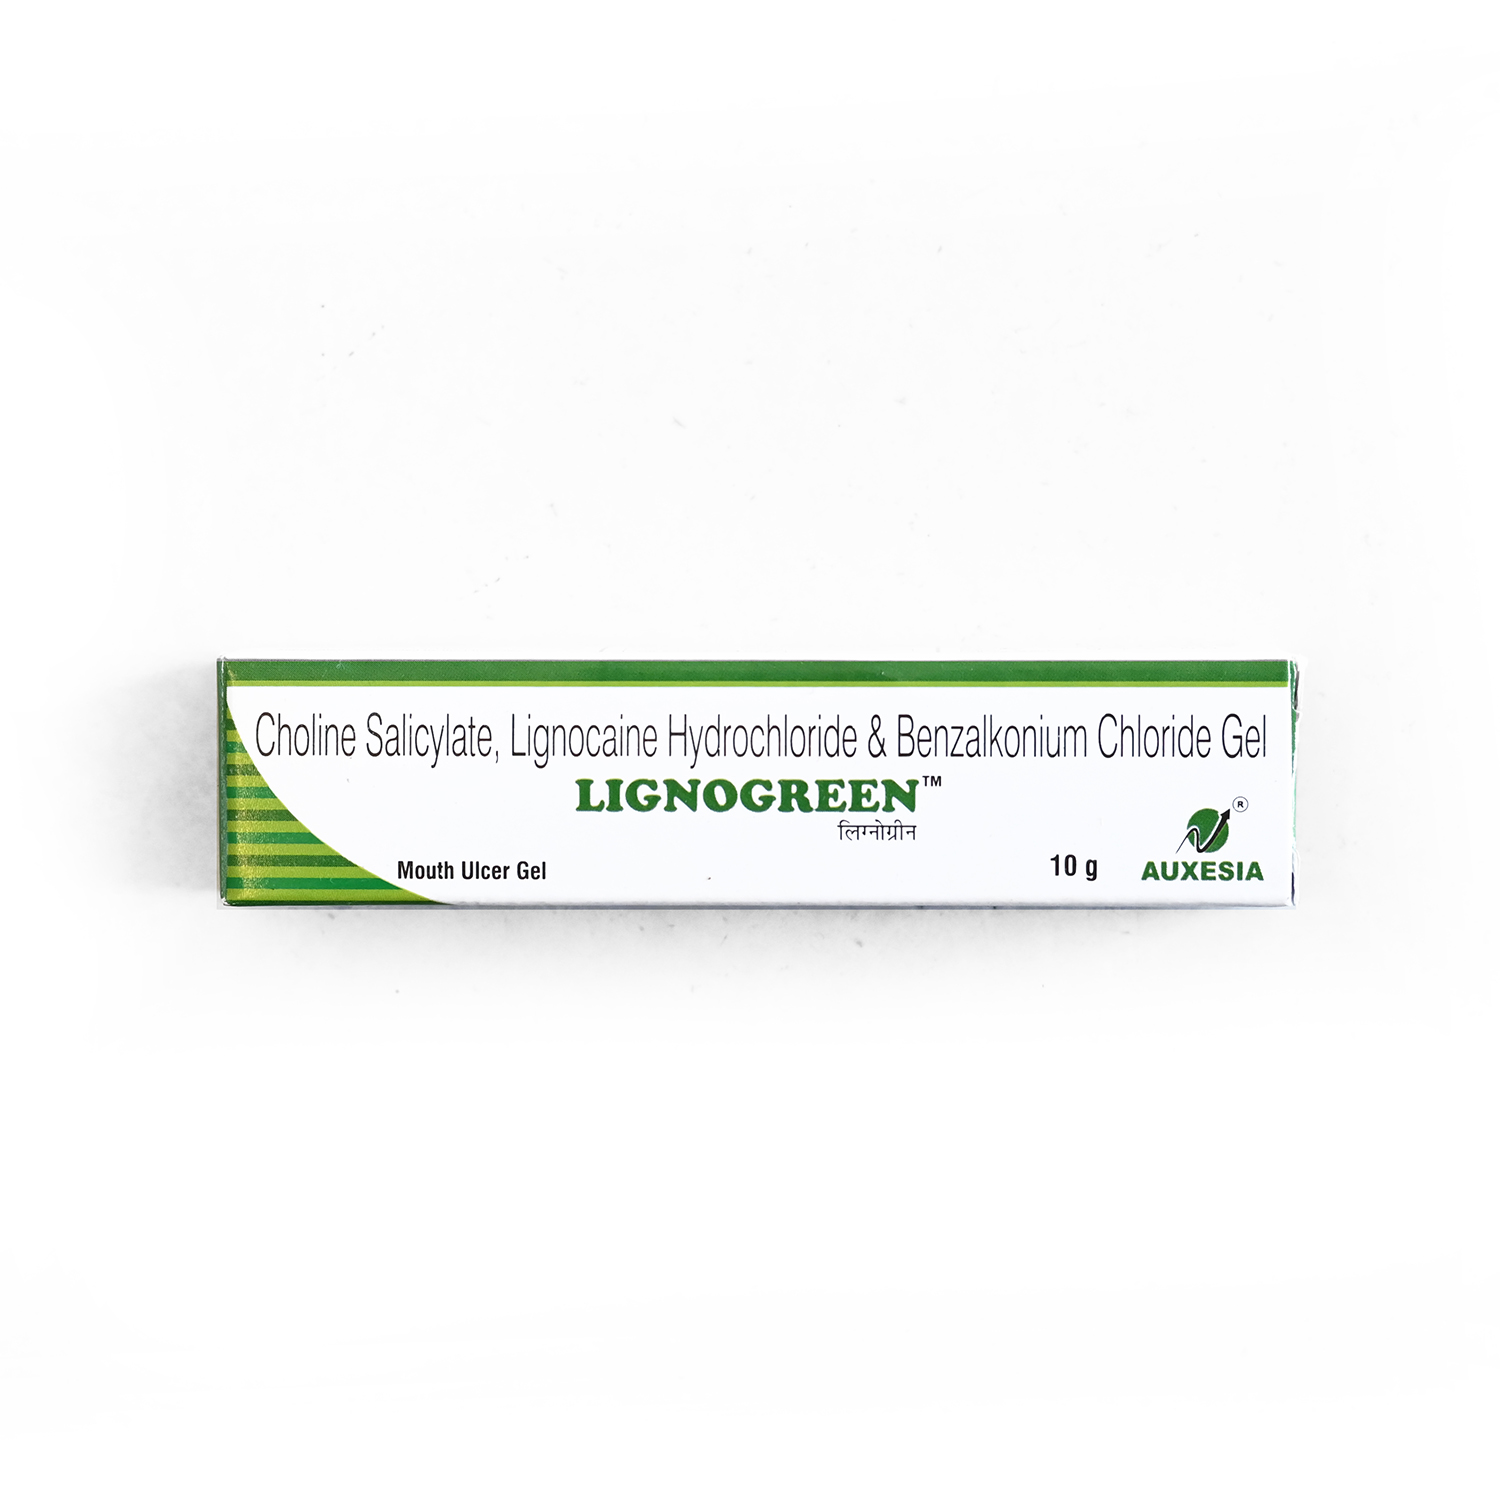 Lignogreen (Mouth Ulcer Gel)